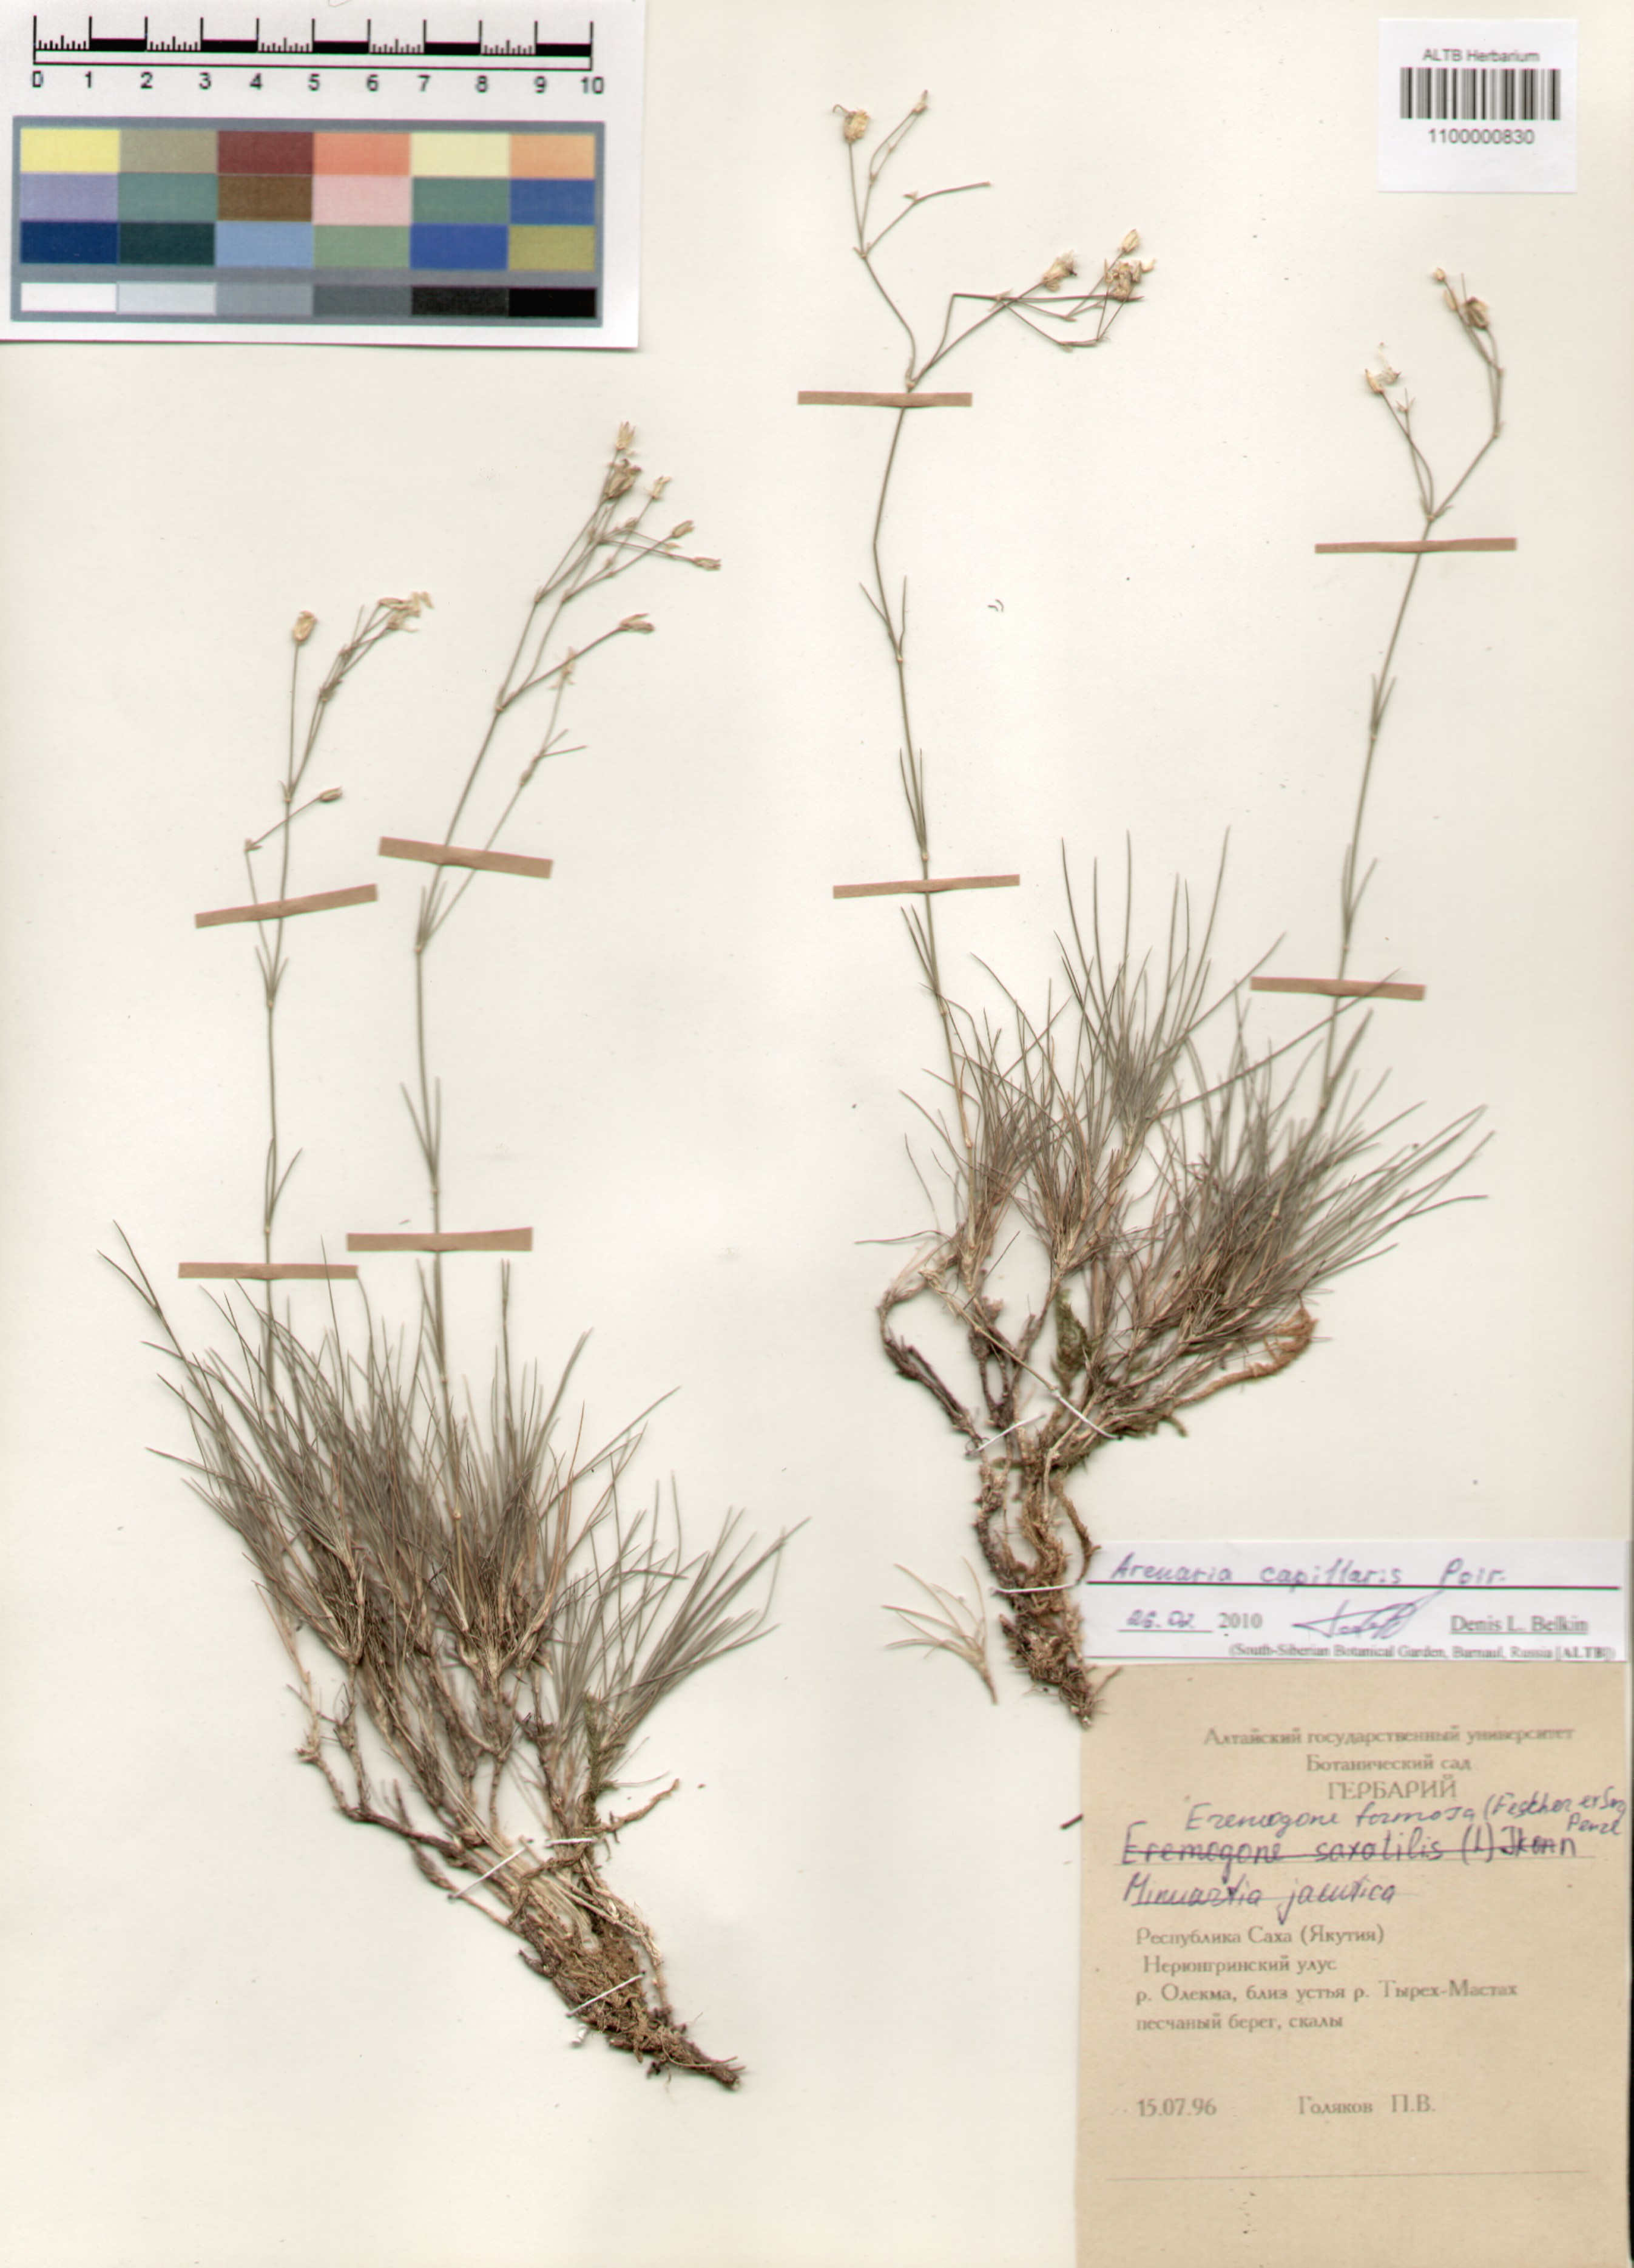 Caryophyllaceae,Arenaria capillaris Poir.